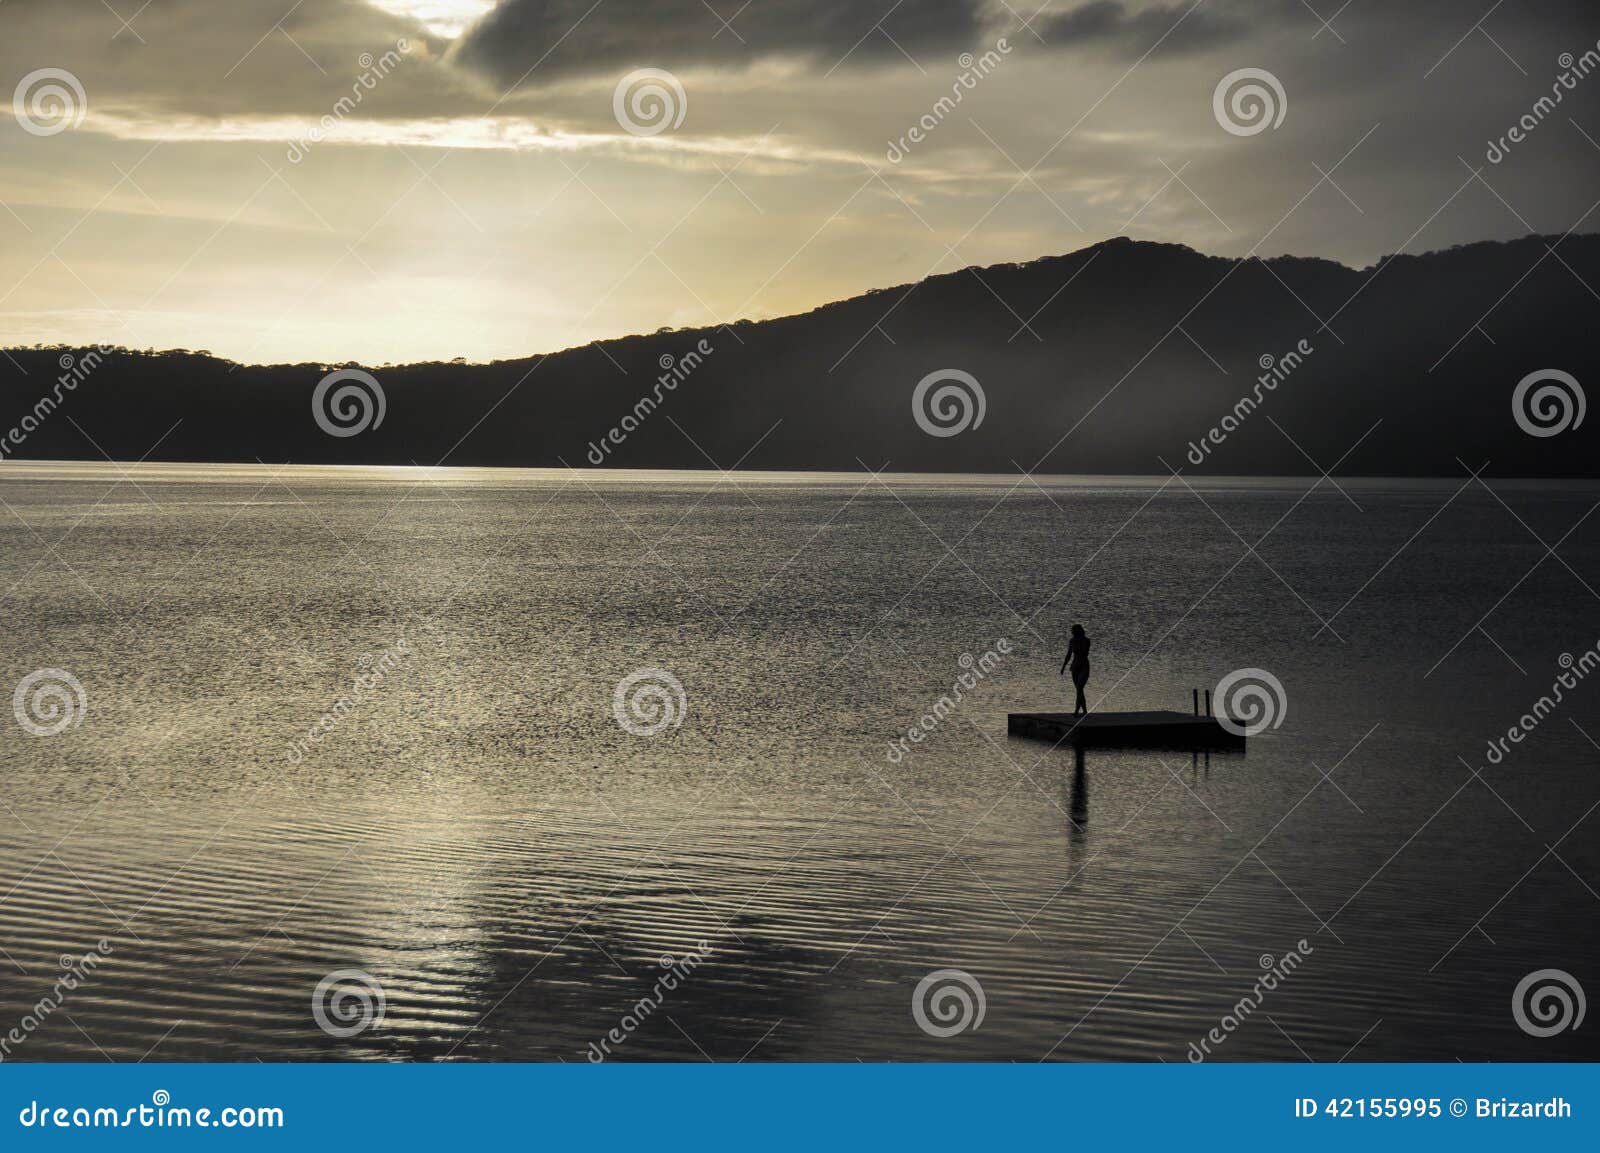 sunrise on apoyo lake, nicaragua